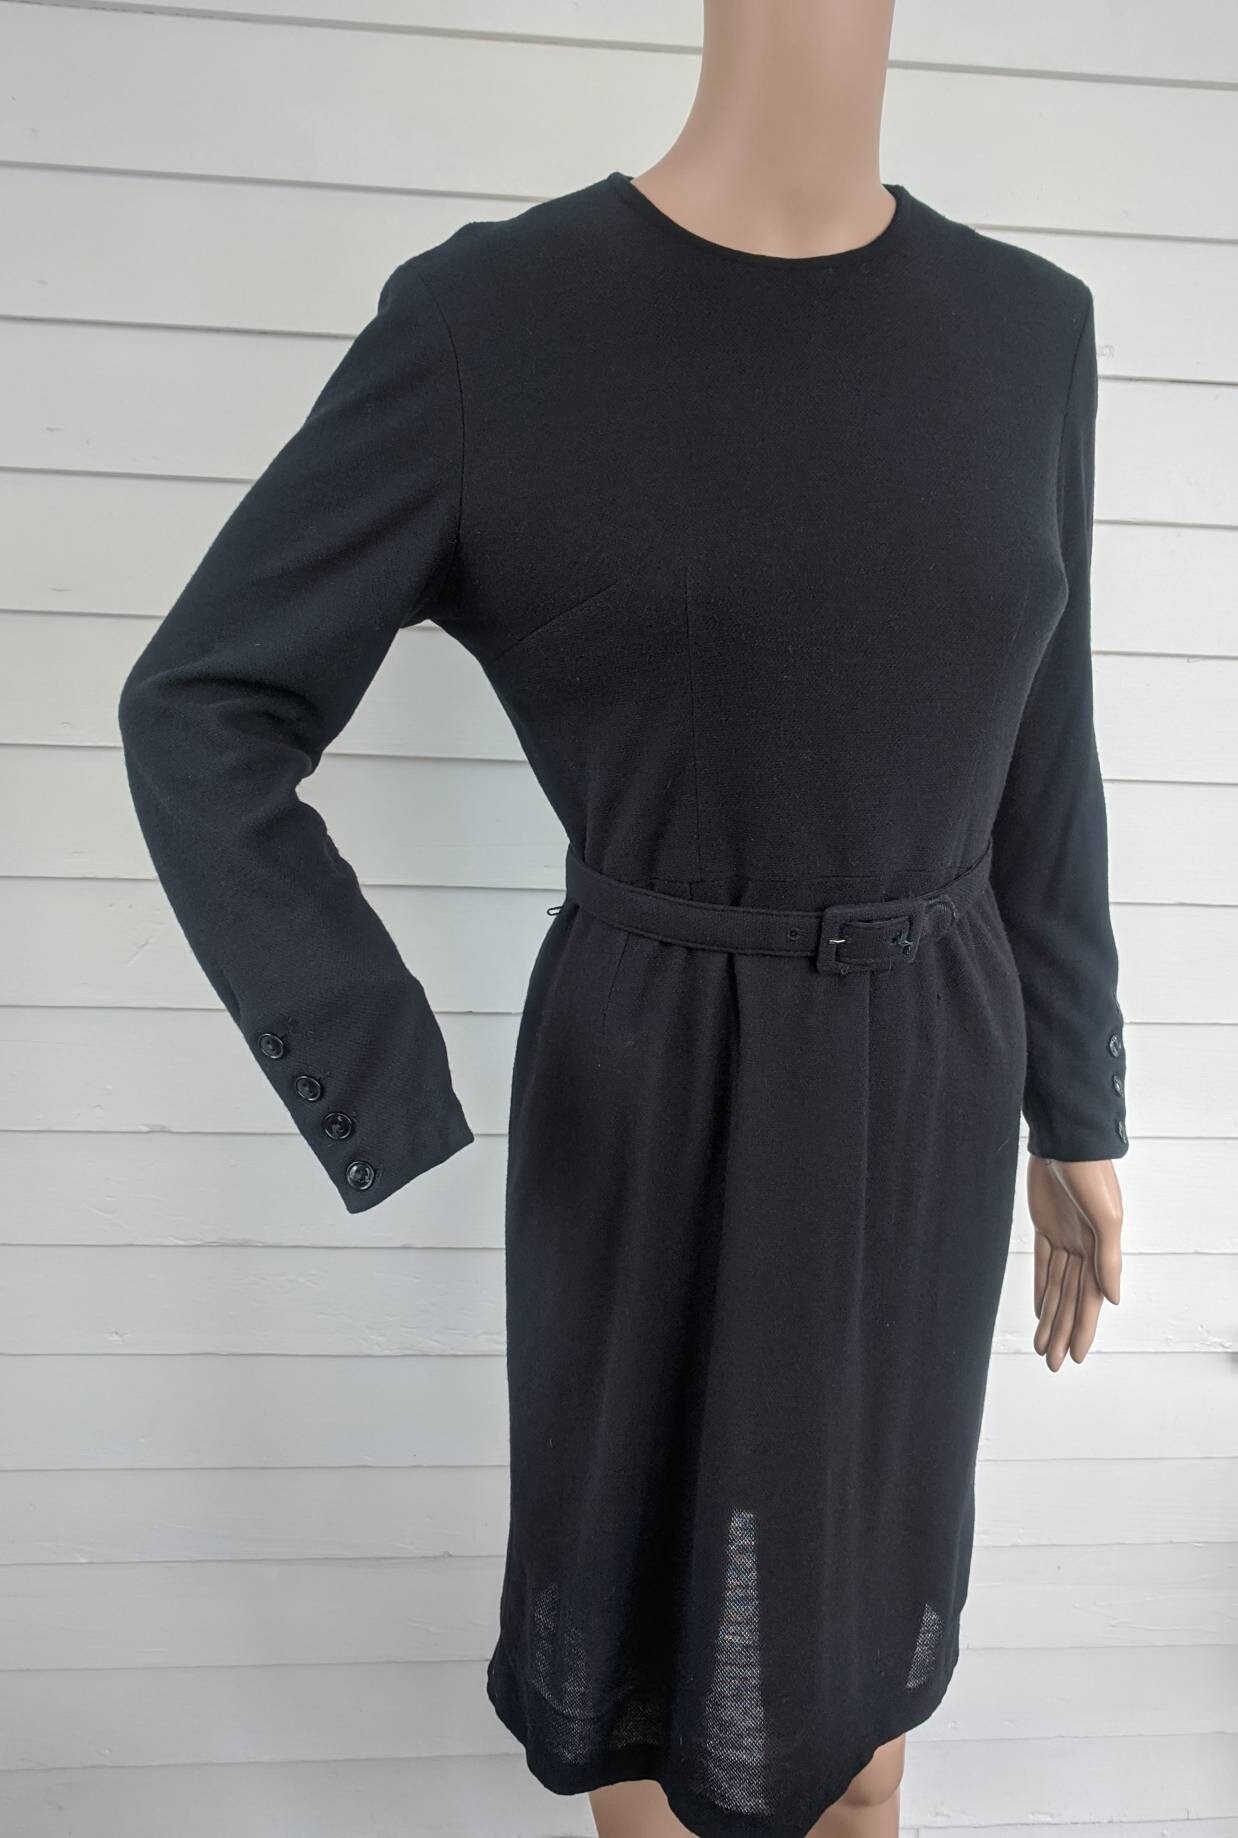 60s Black Dress Vintage Long Sleeve S | Etsy